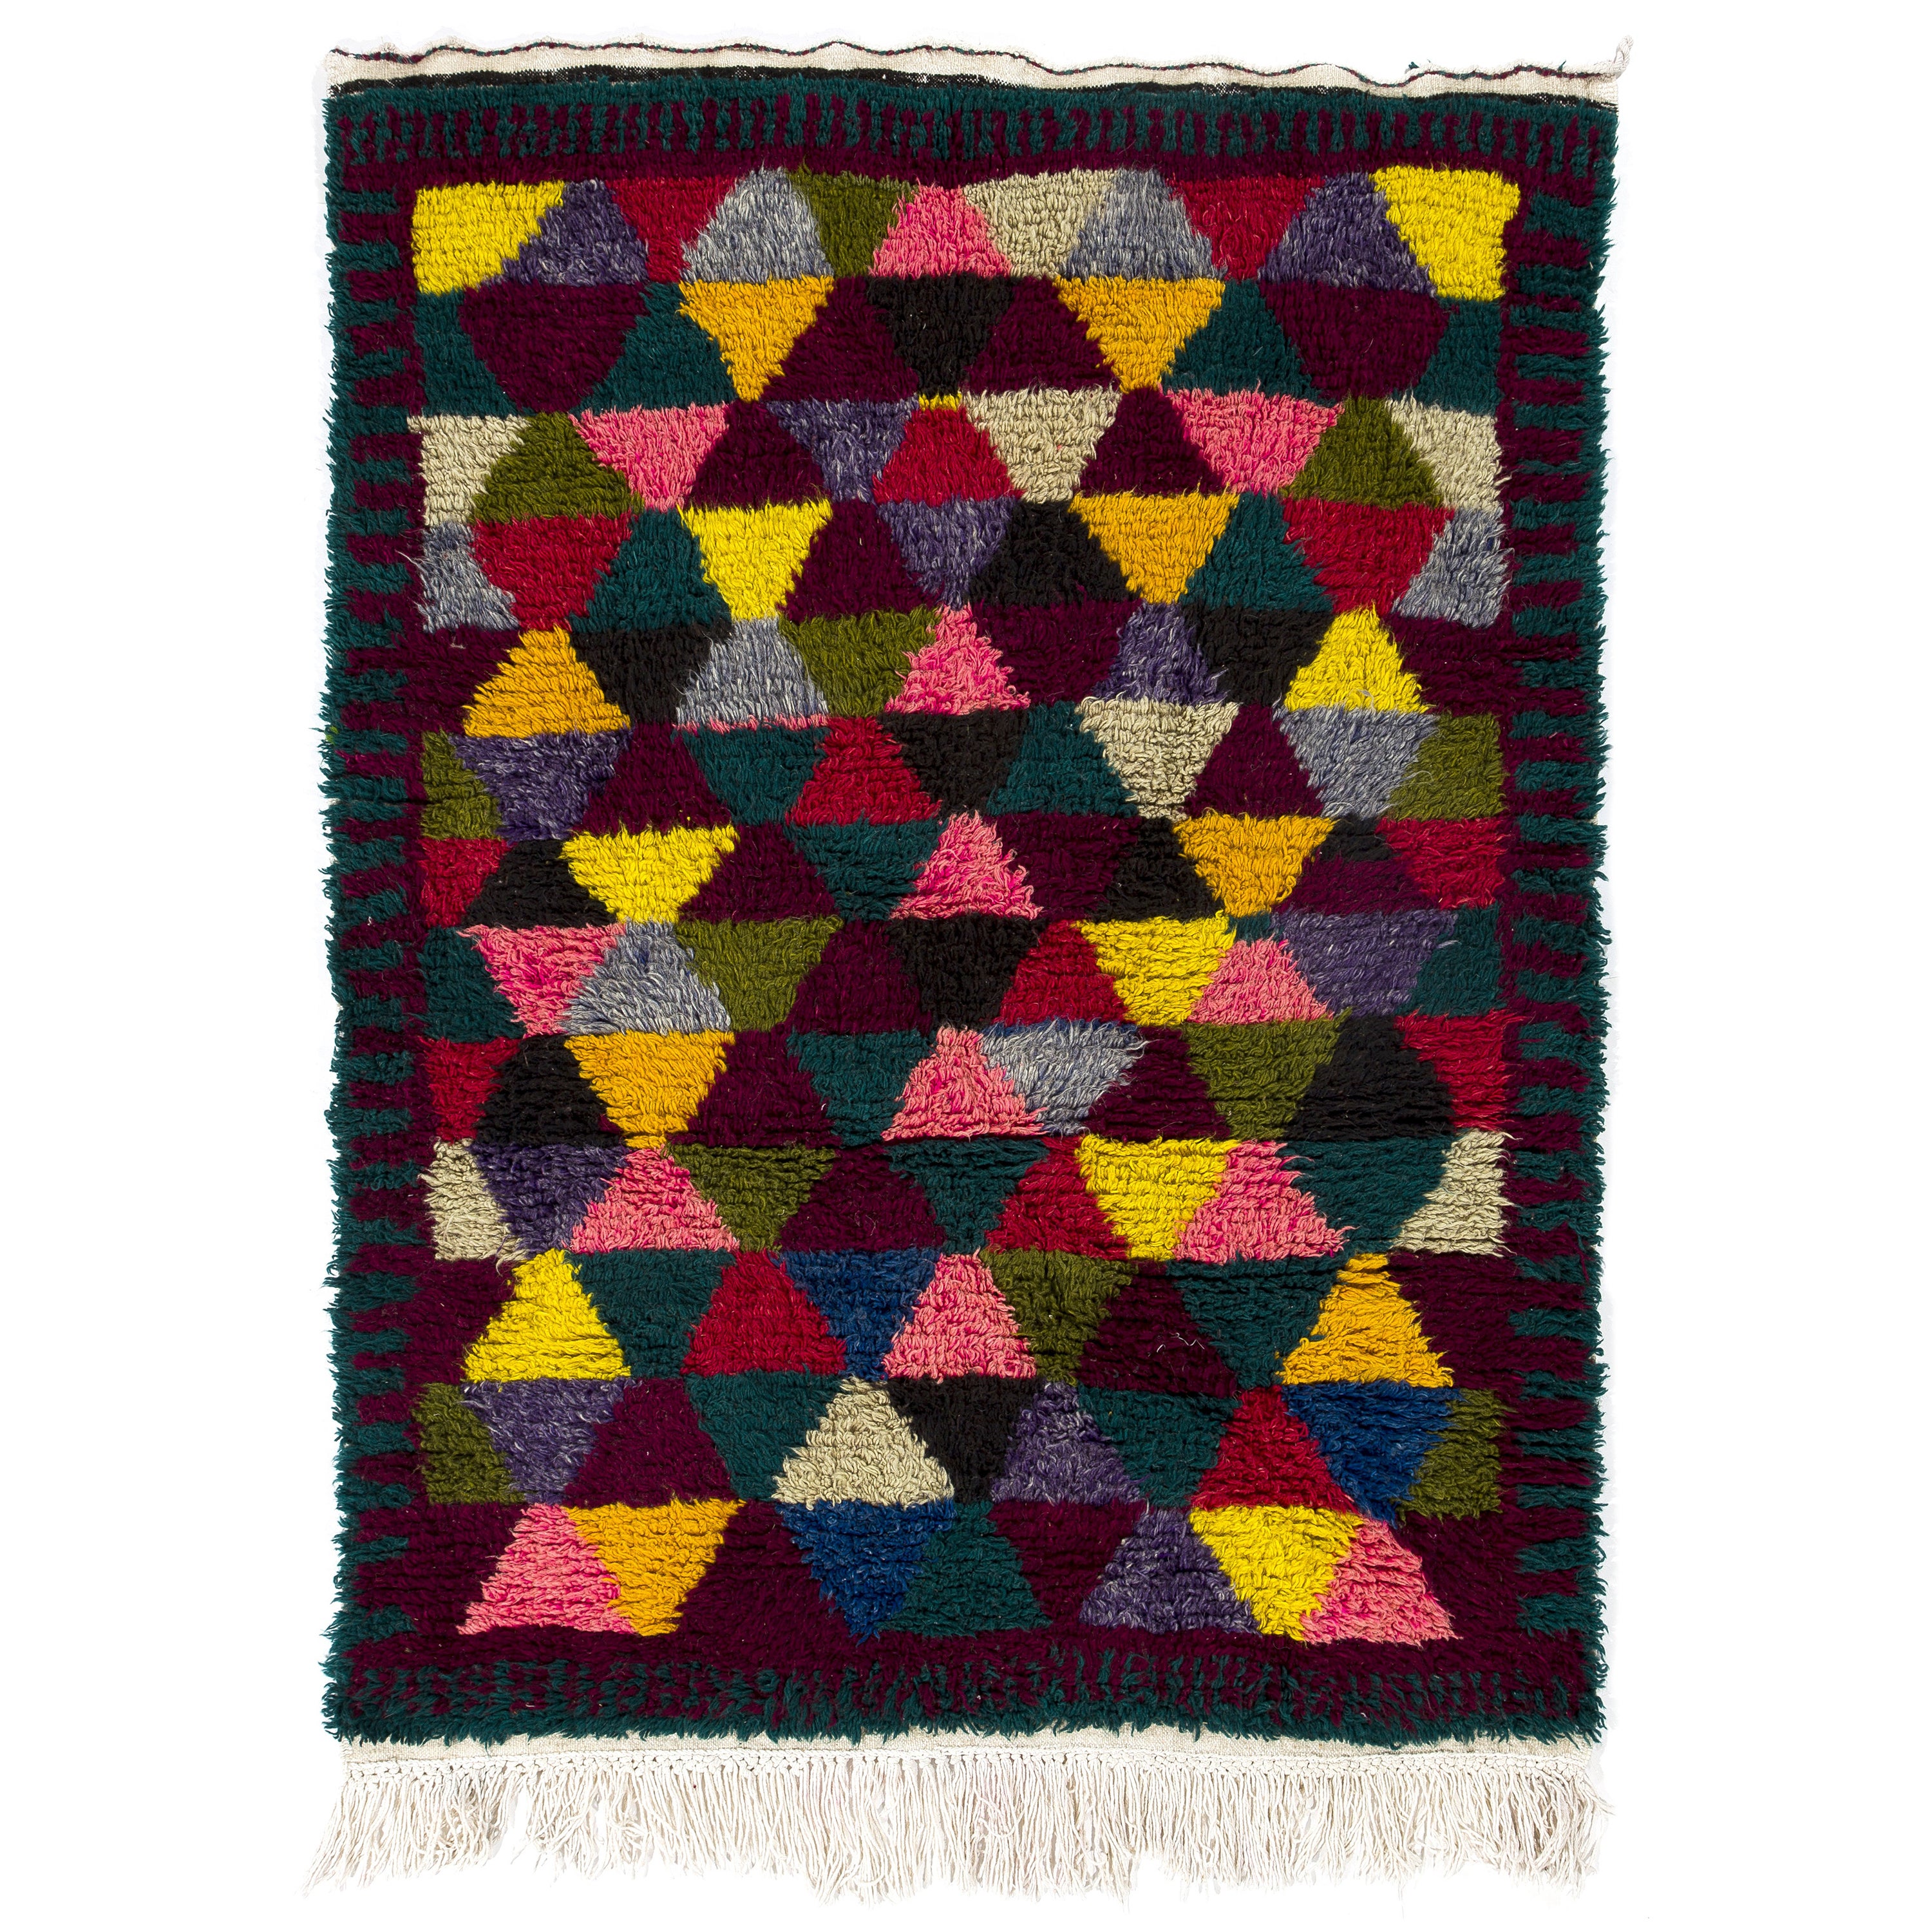 4.2x5.5 Ft Vibrant Handmade Tulu Rug. Soft Cozy Wool Pile. Vintage Wall Hanging